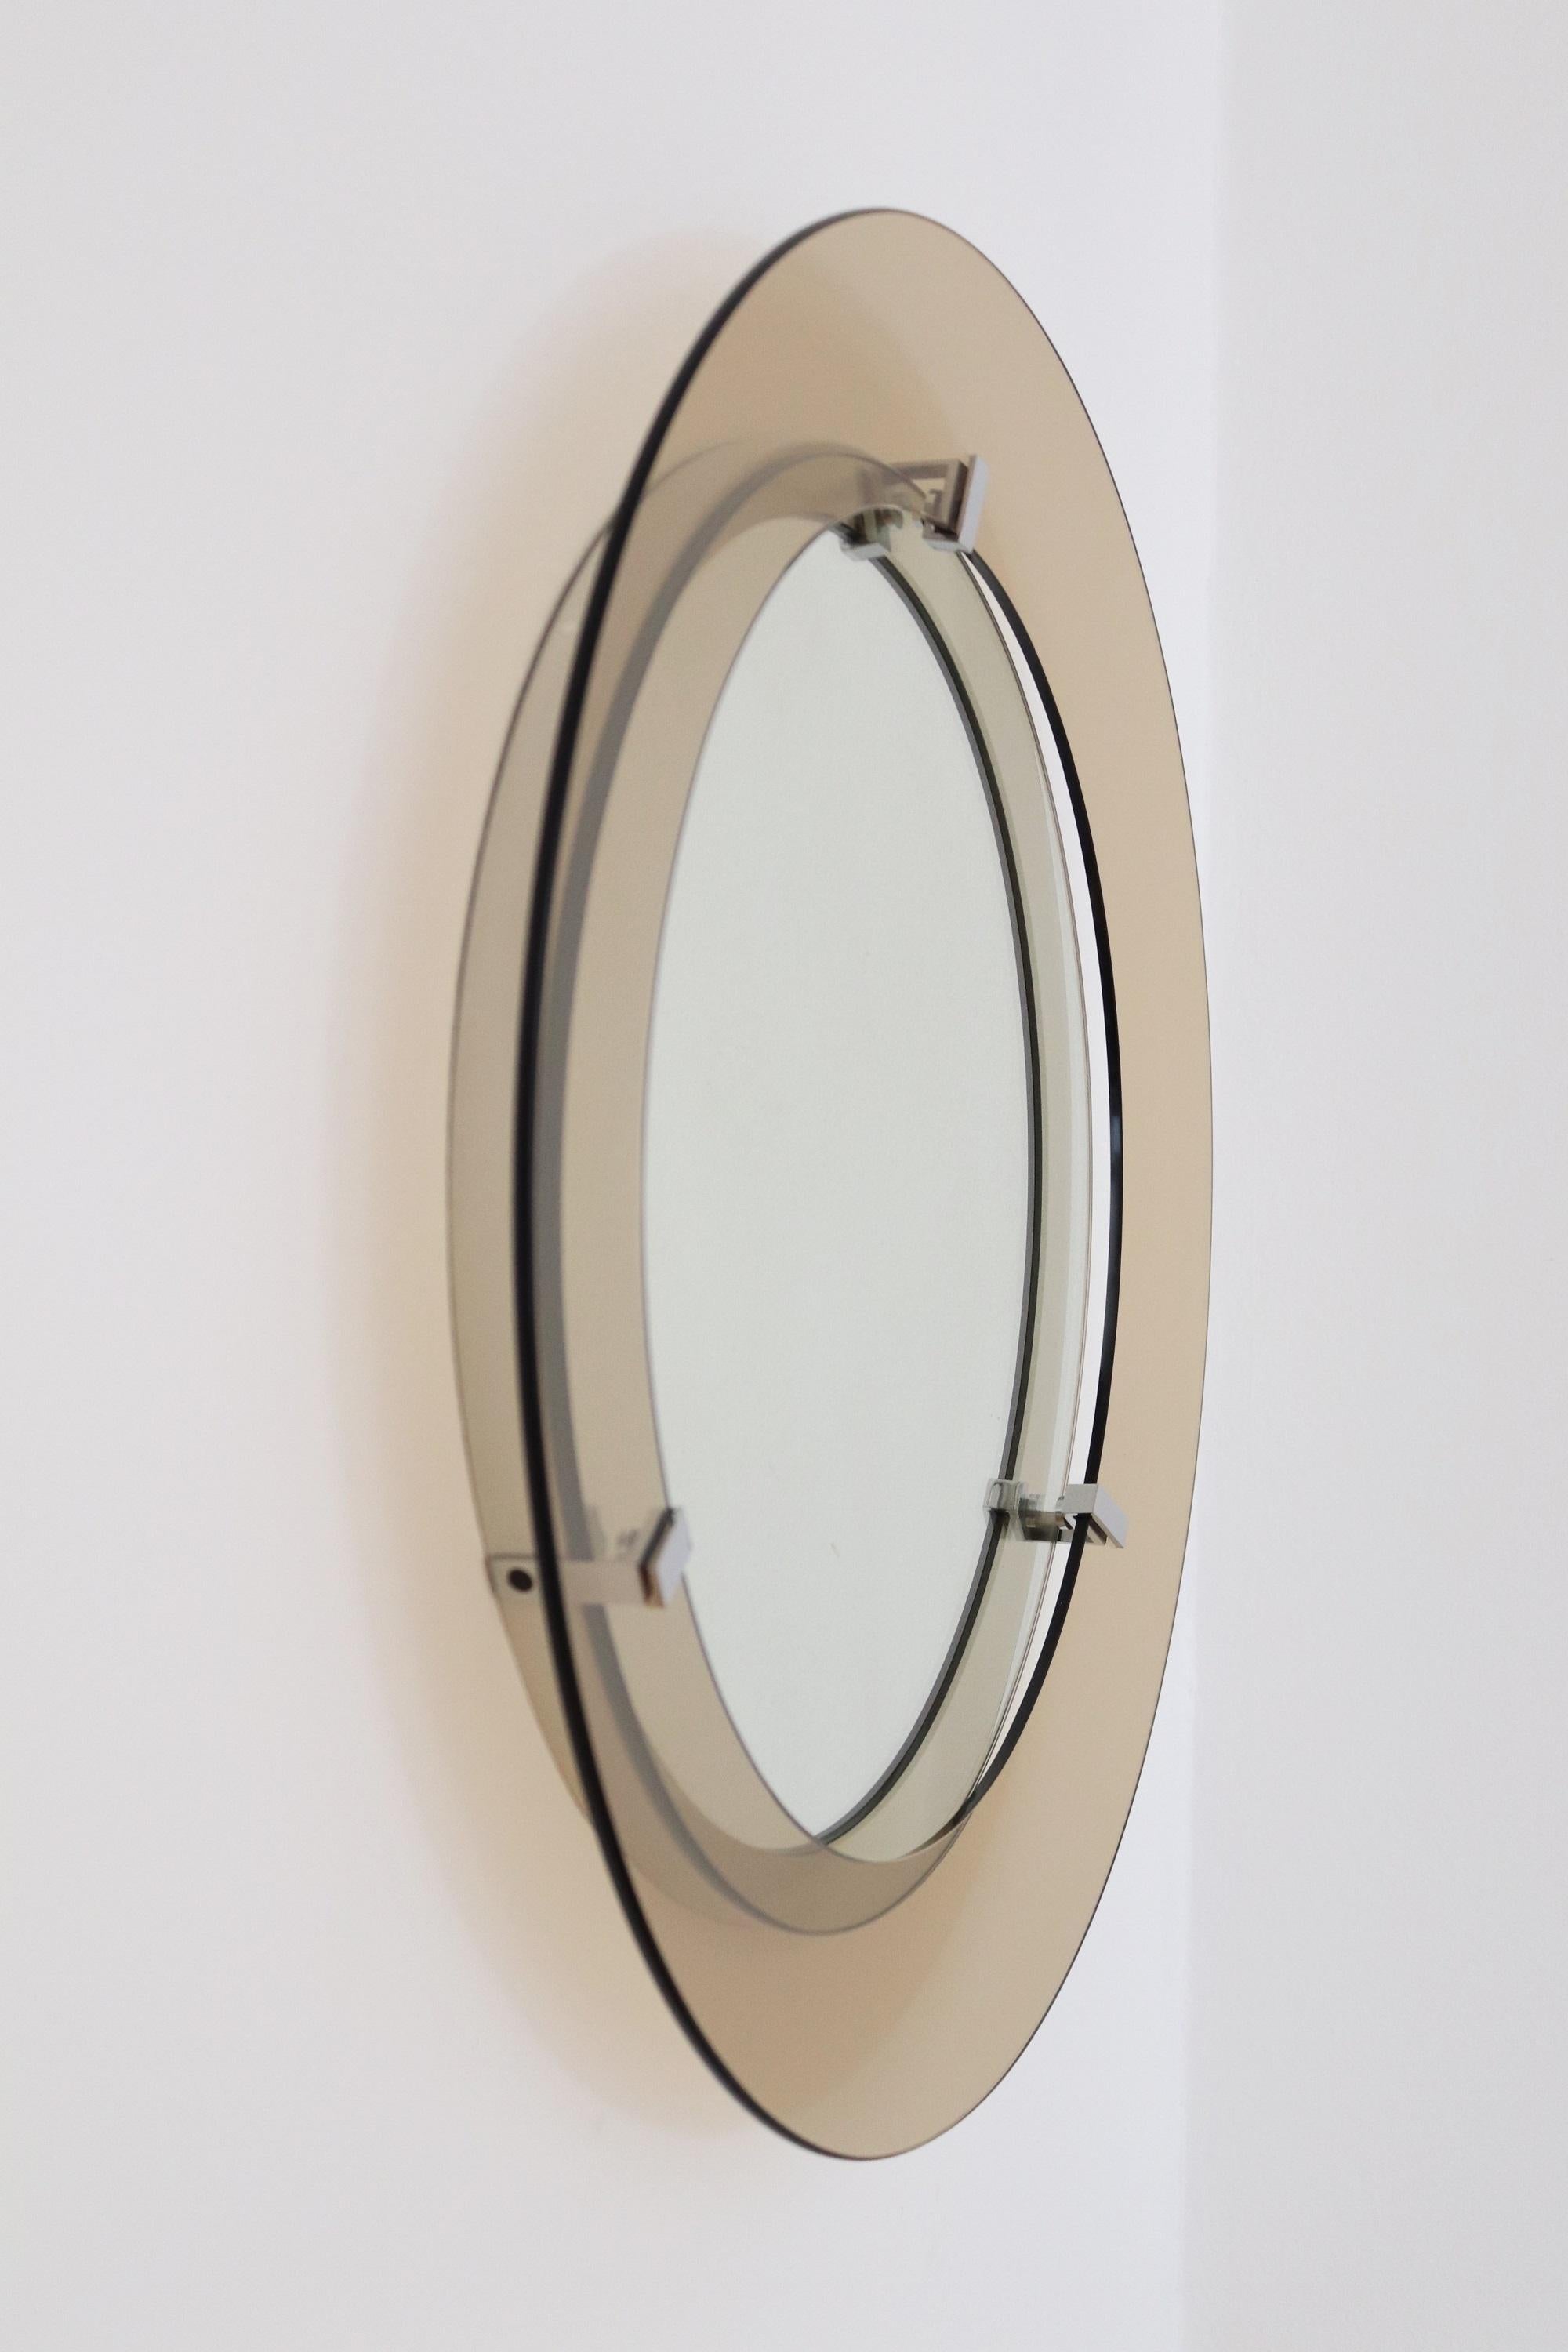 Late 20th Century Italian Midcentury Wall Mirror by Veca, 1970s